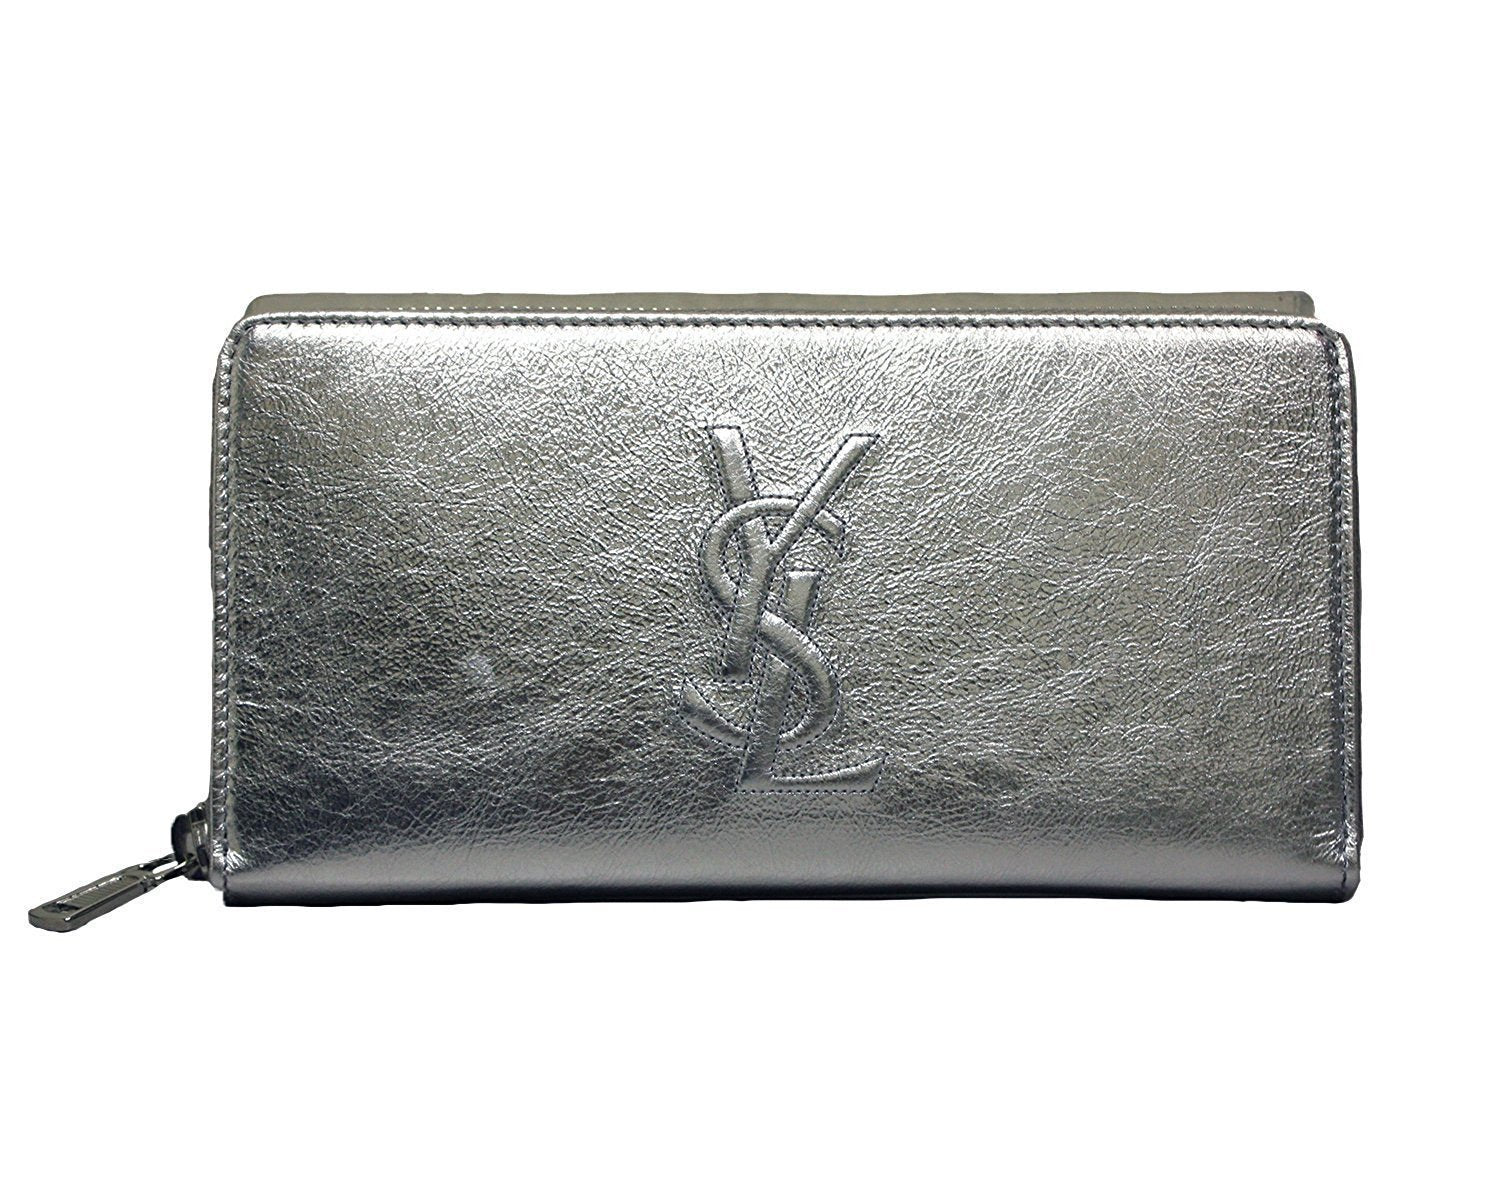 Yves Saint Laurent Wallet YSL Belle du Jour Silver Leather Zip Wallet 352904 - LUXURYMRKT